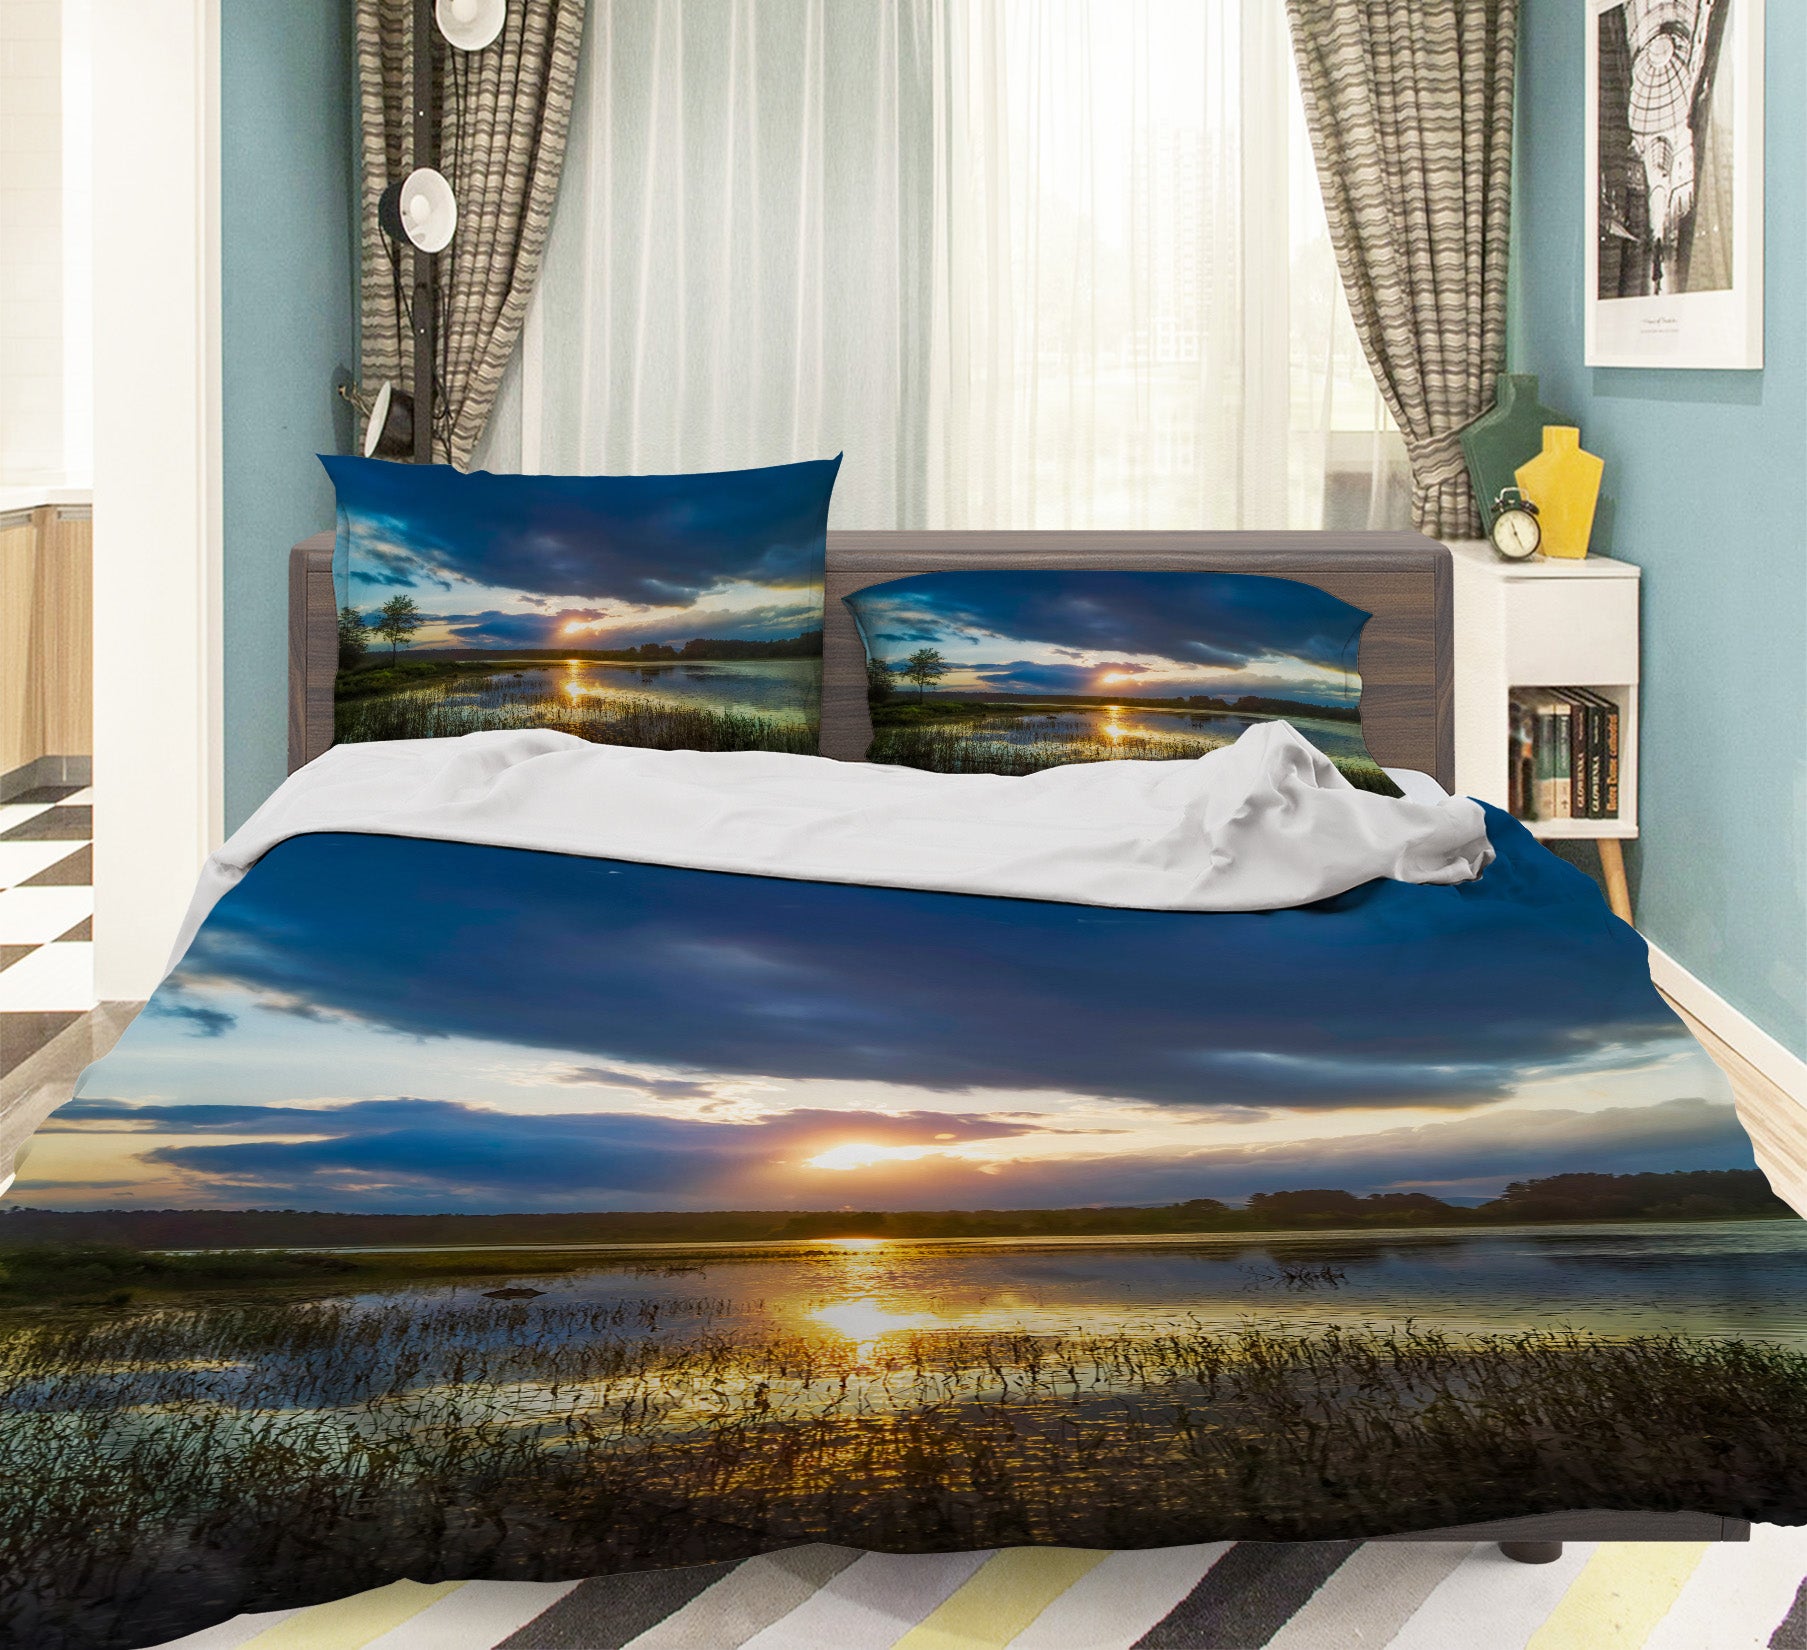 3D Lake Sky 86013 Jerry LoFaro bedding Bed Pillowcases Quilt